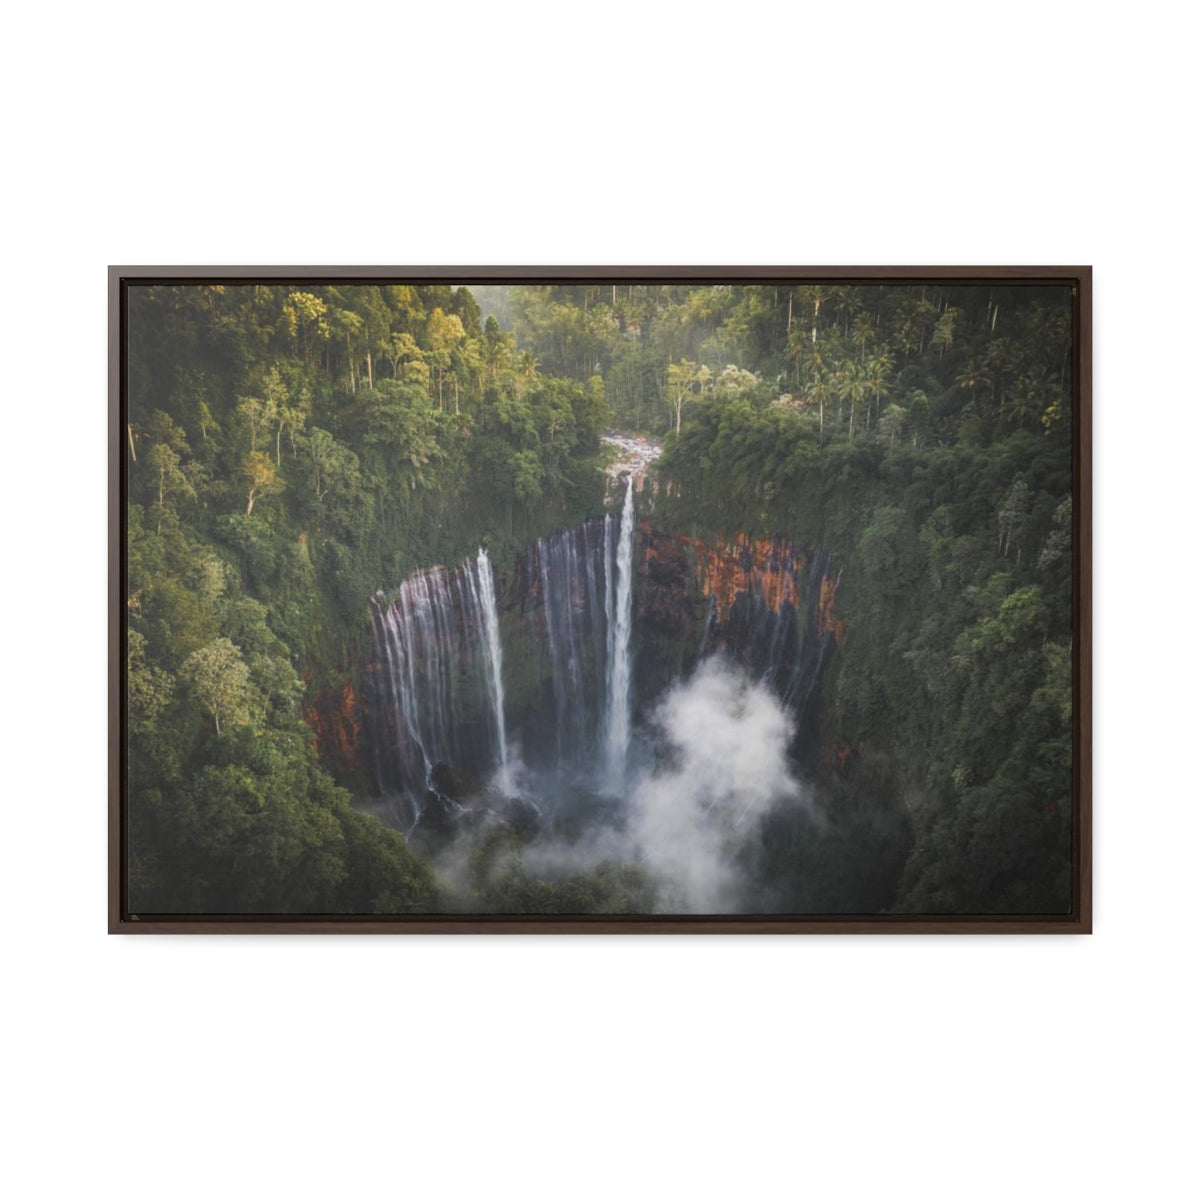 Indonesia Waterfall Canvas Print